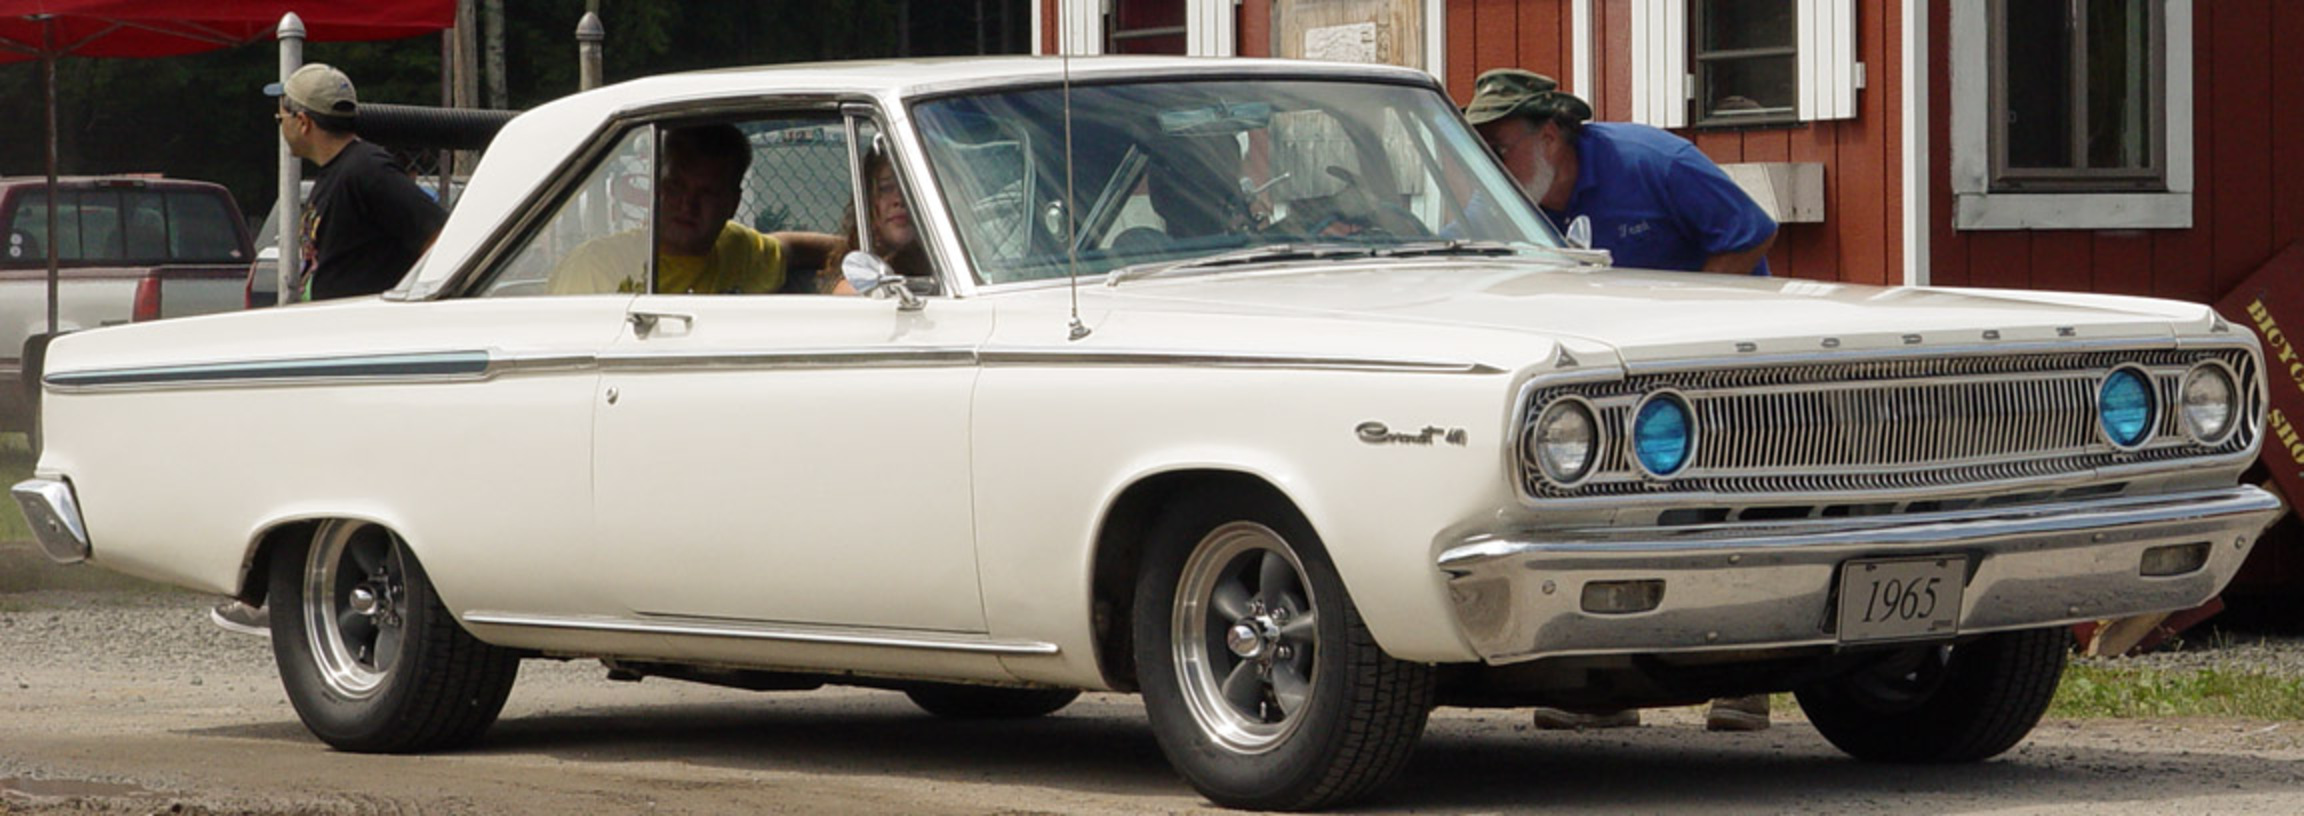 1965 Dodge Coronet 440 - White - Side Angle. Image Copyright Serious Wheels